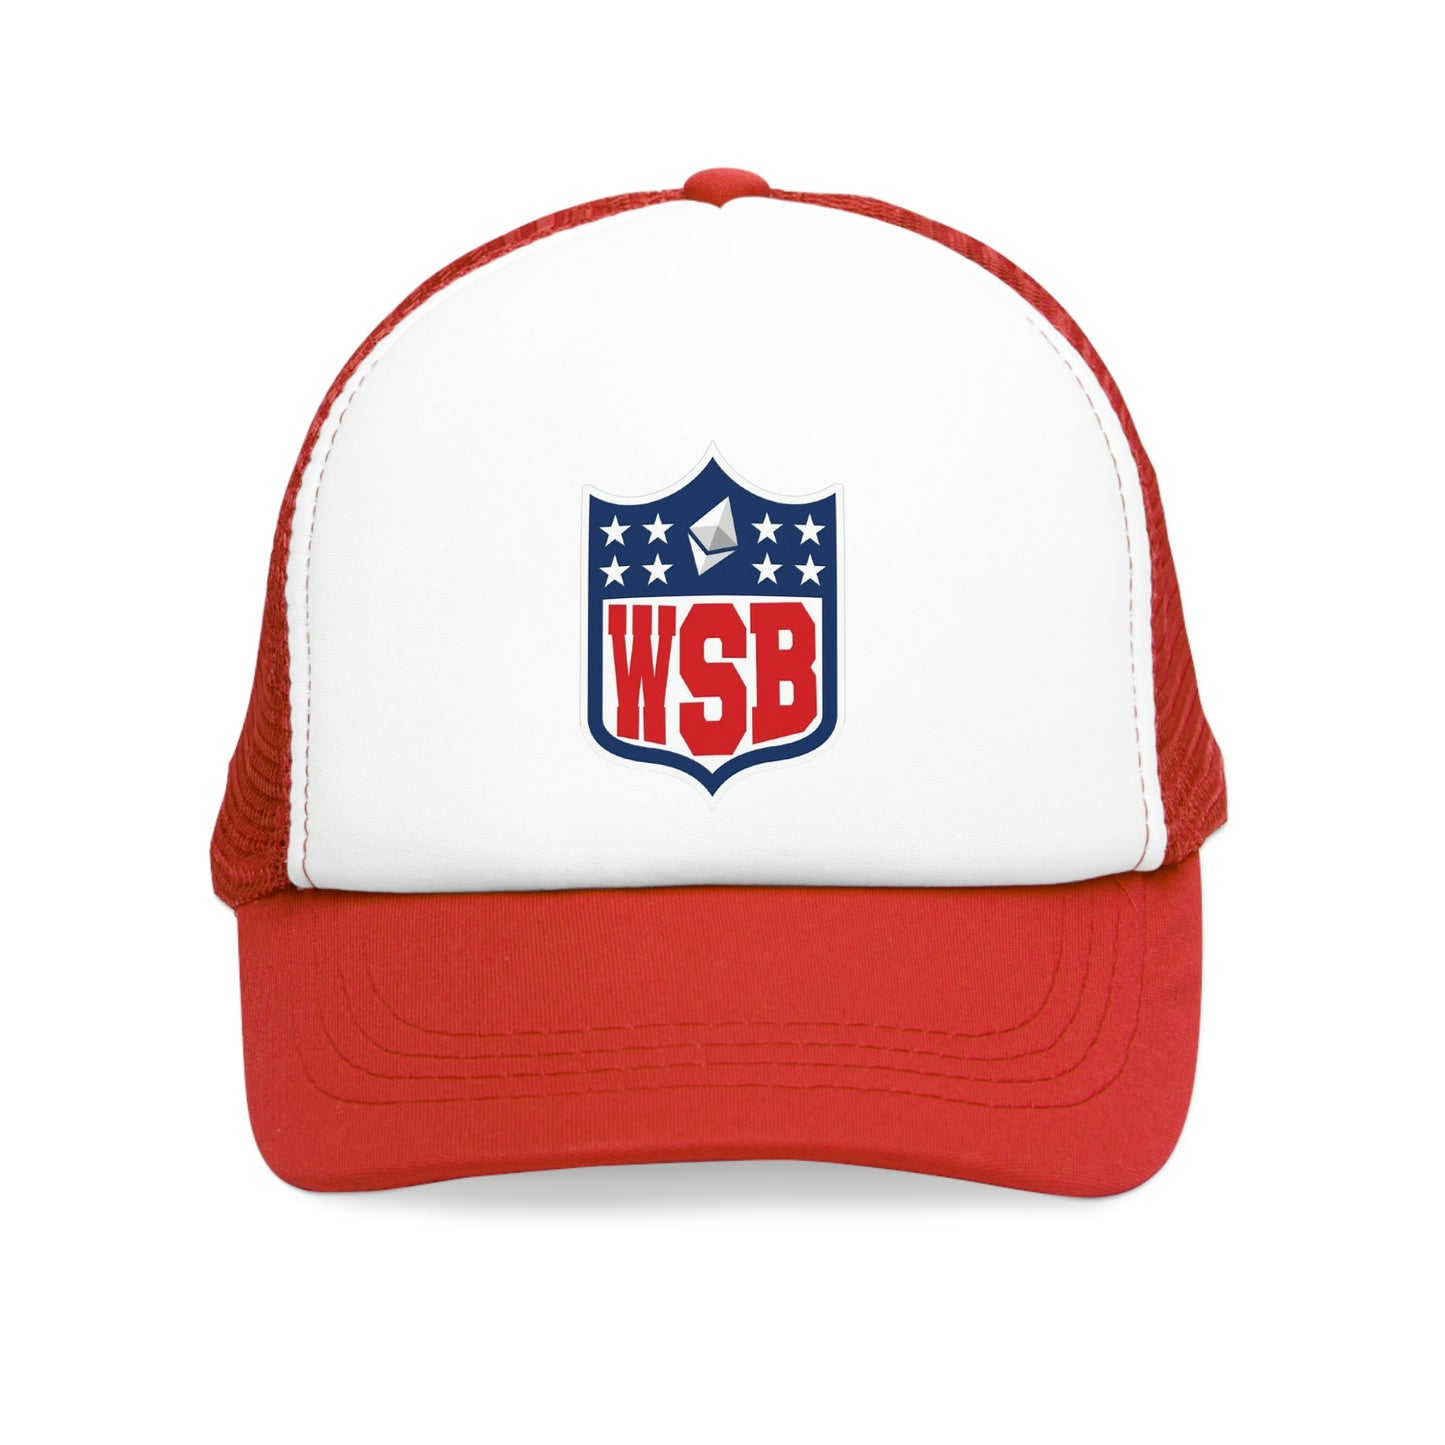 WSB NFL-Style Trucker Hat